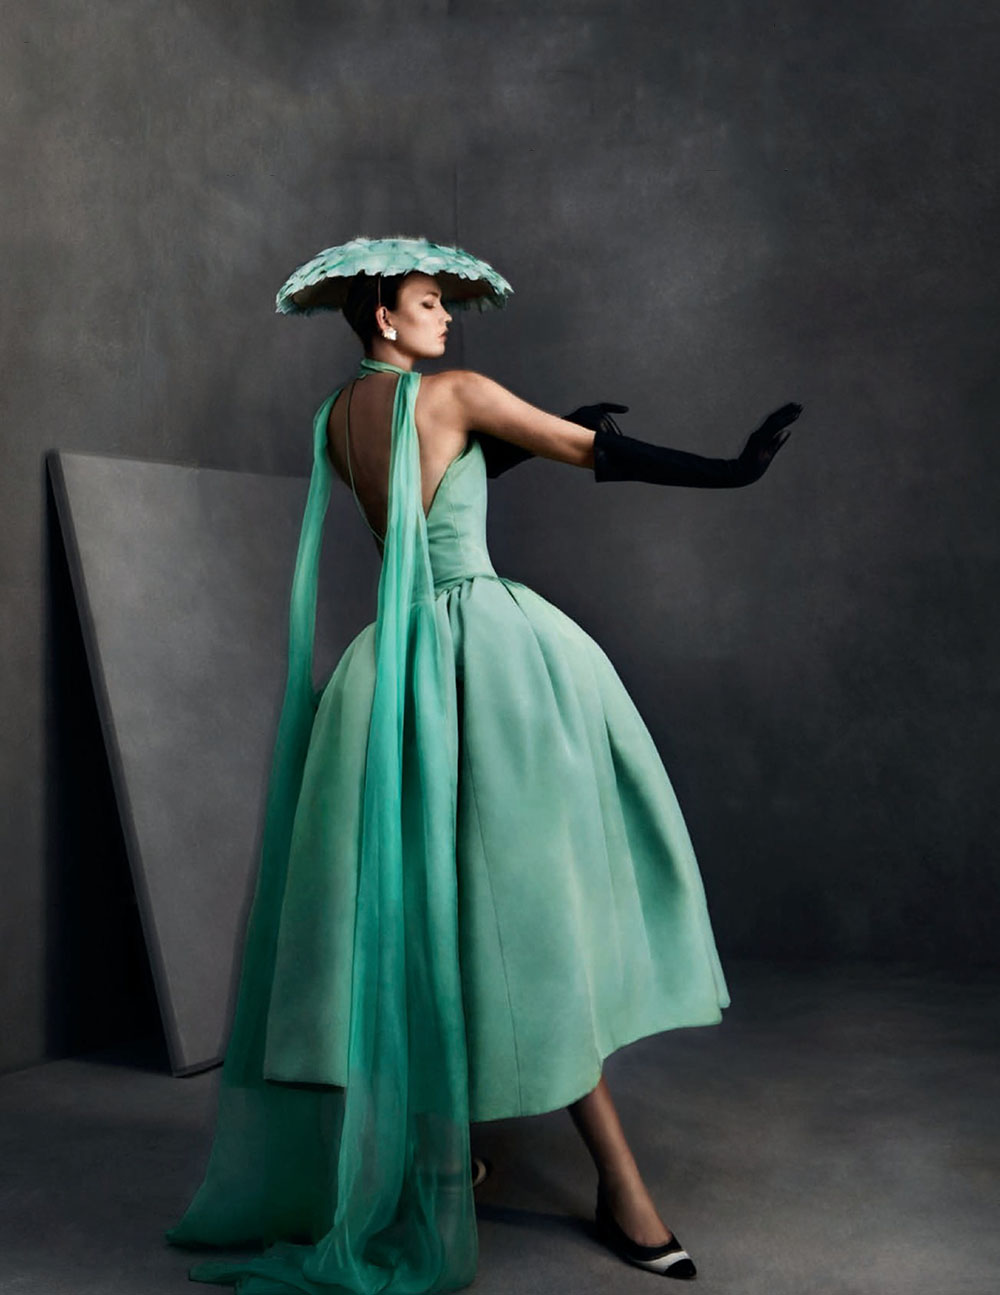 Karlie Kloss covers Vogue Spain December 2019 by Txema Yeste